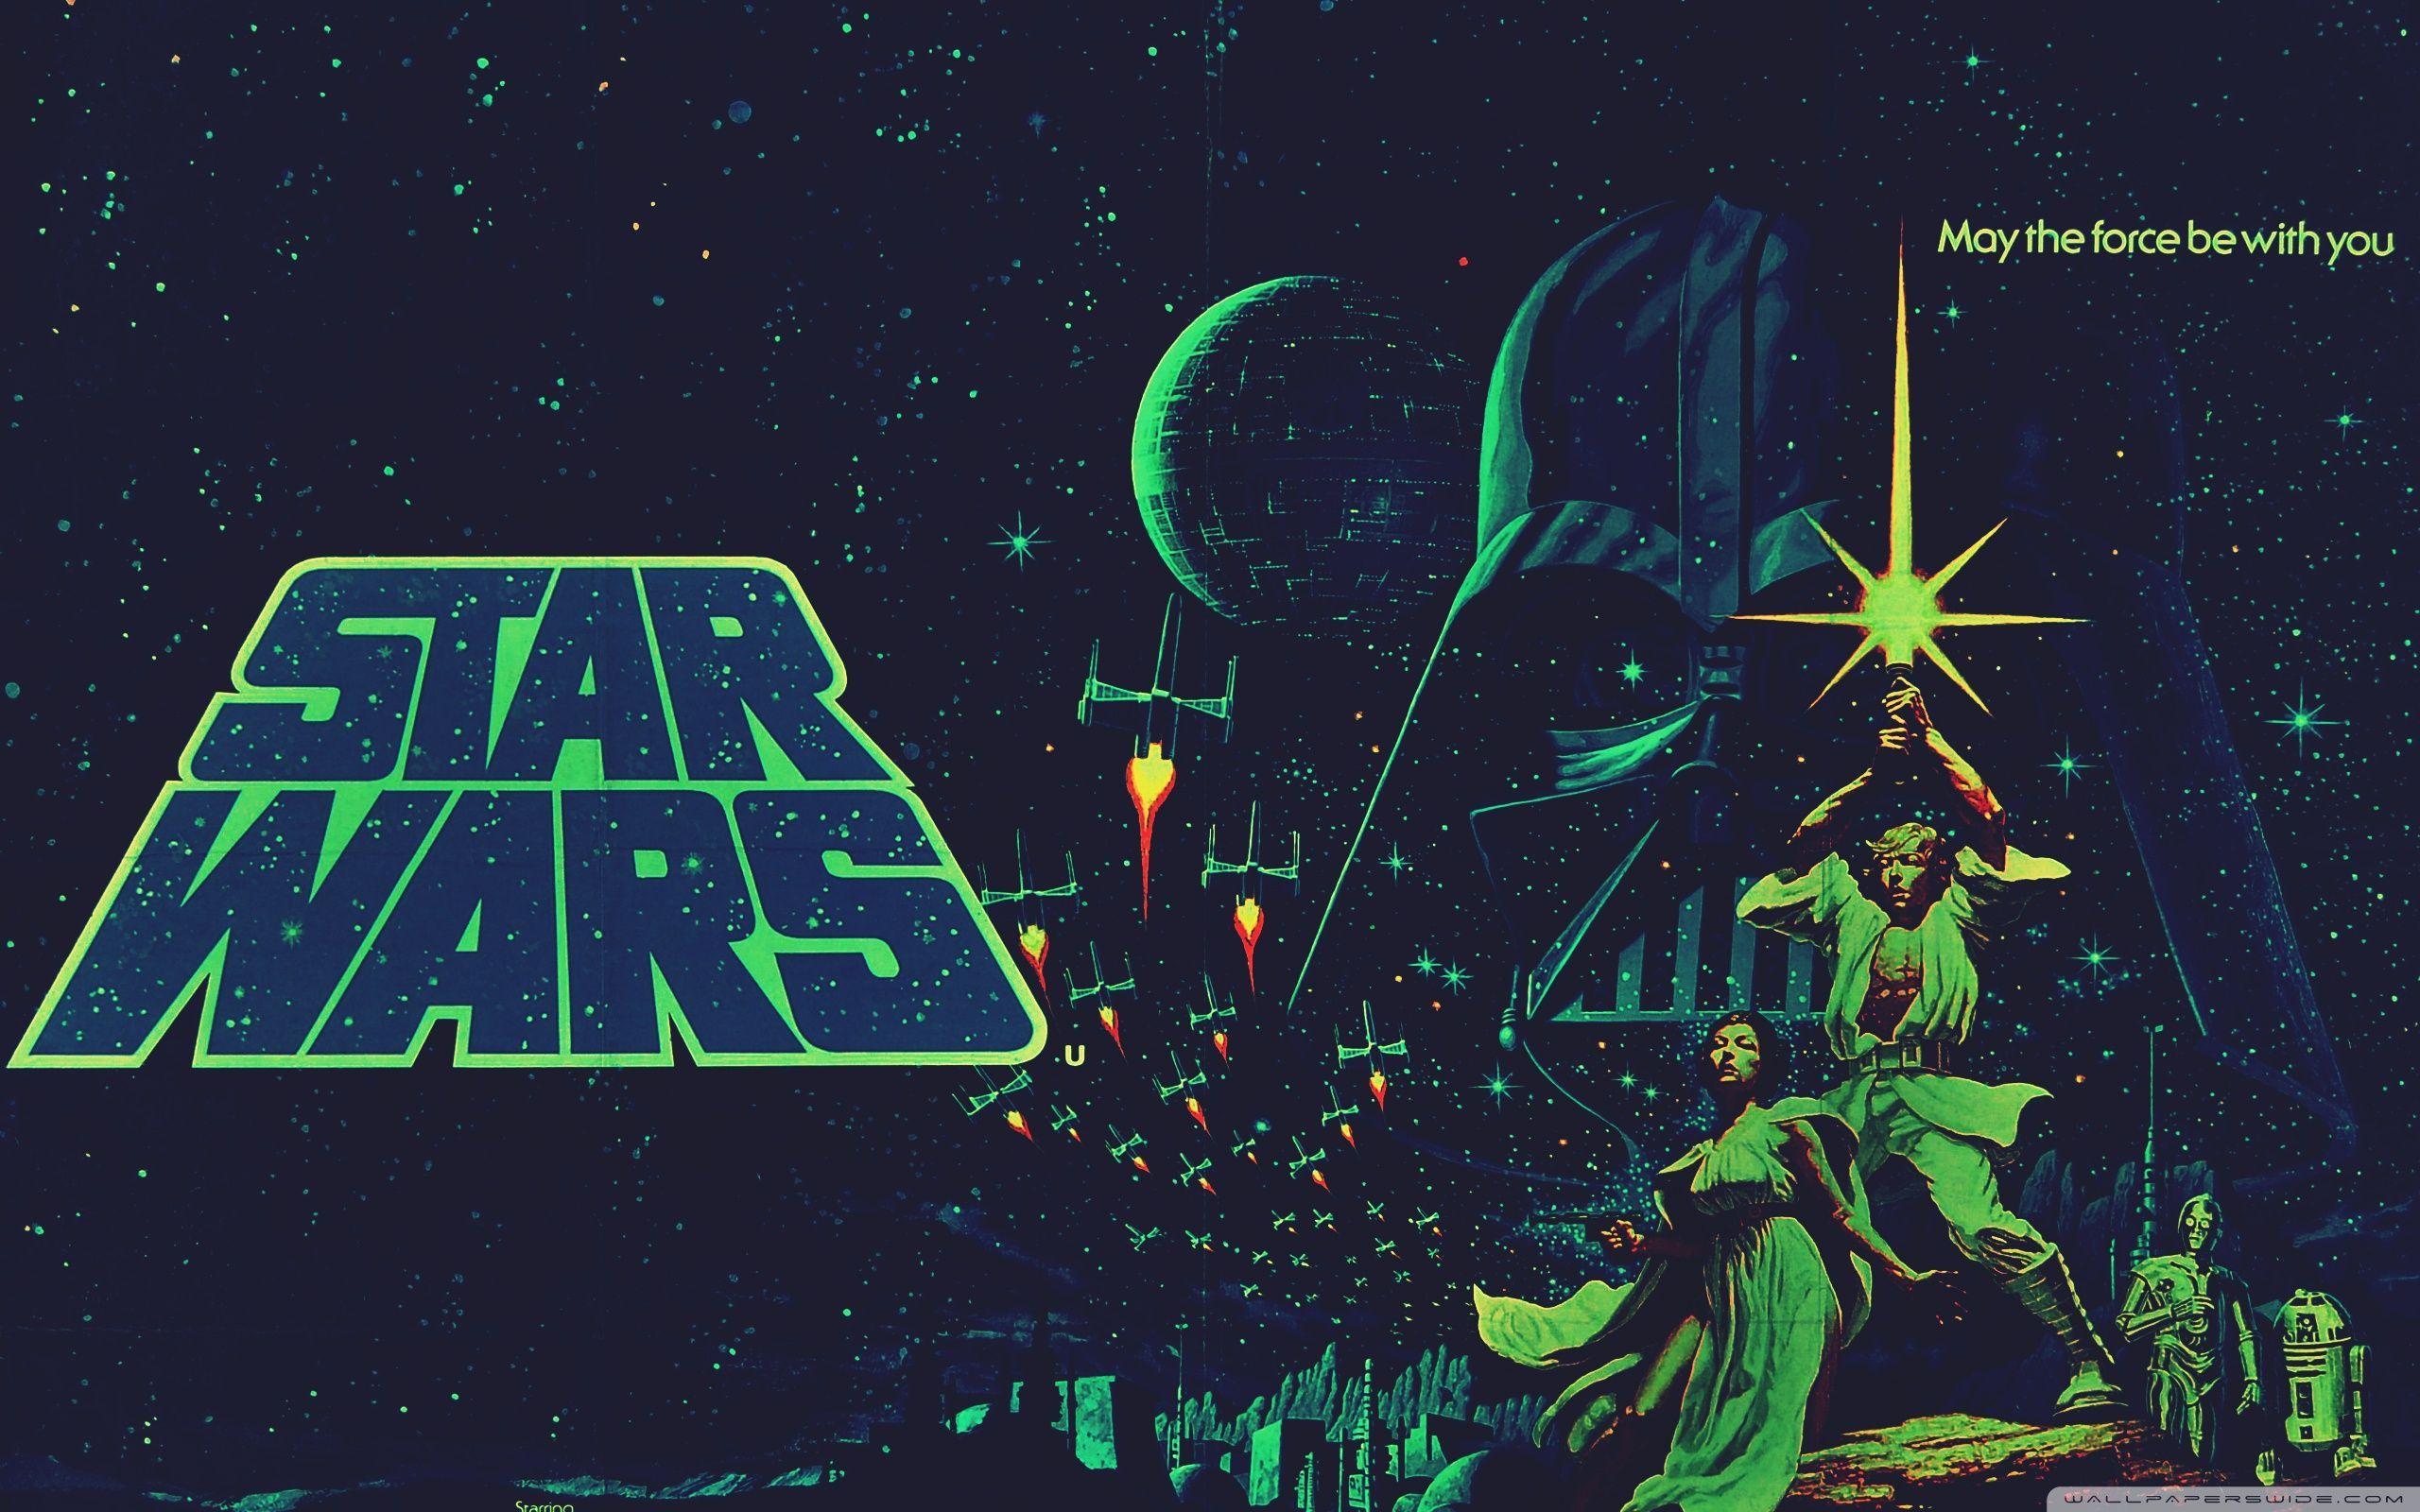 Remera. Star wars wallpaper, Star wars poster, Star wars fans